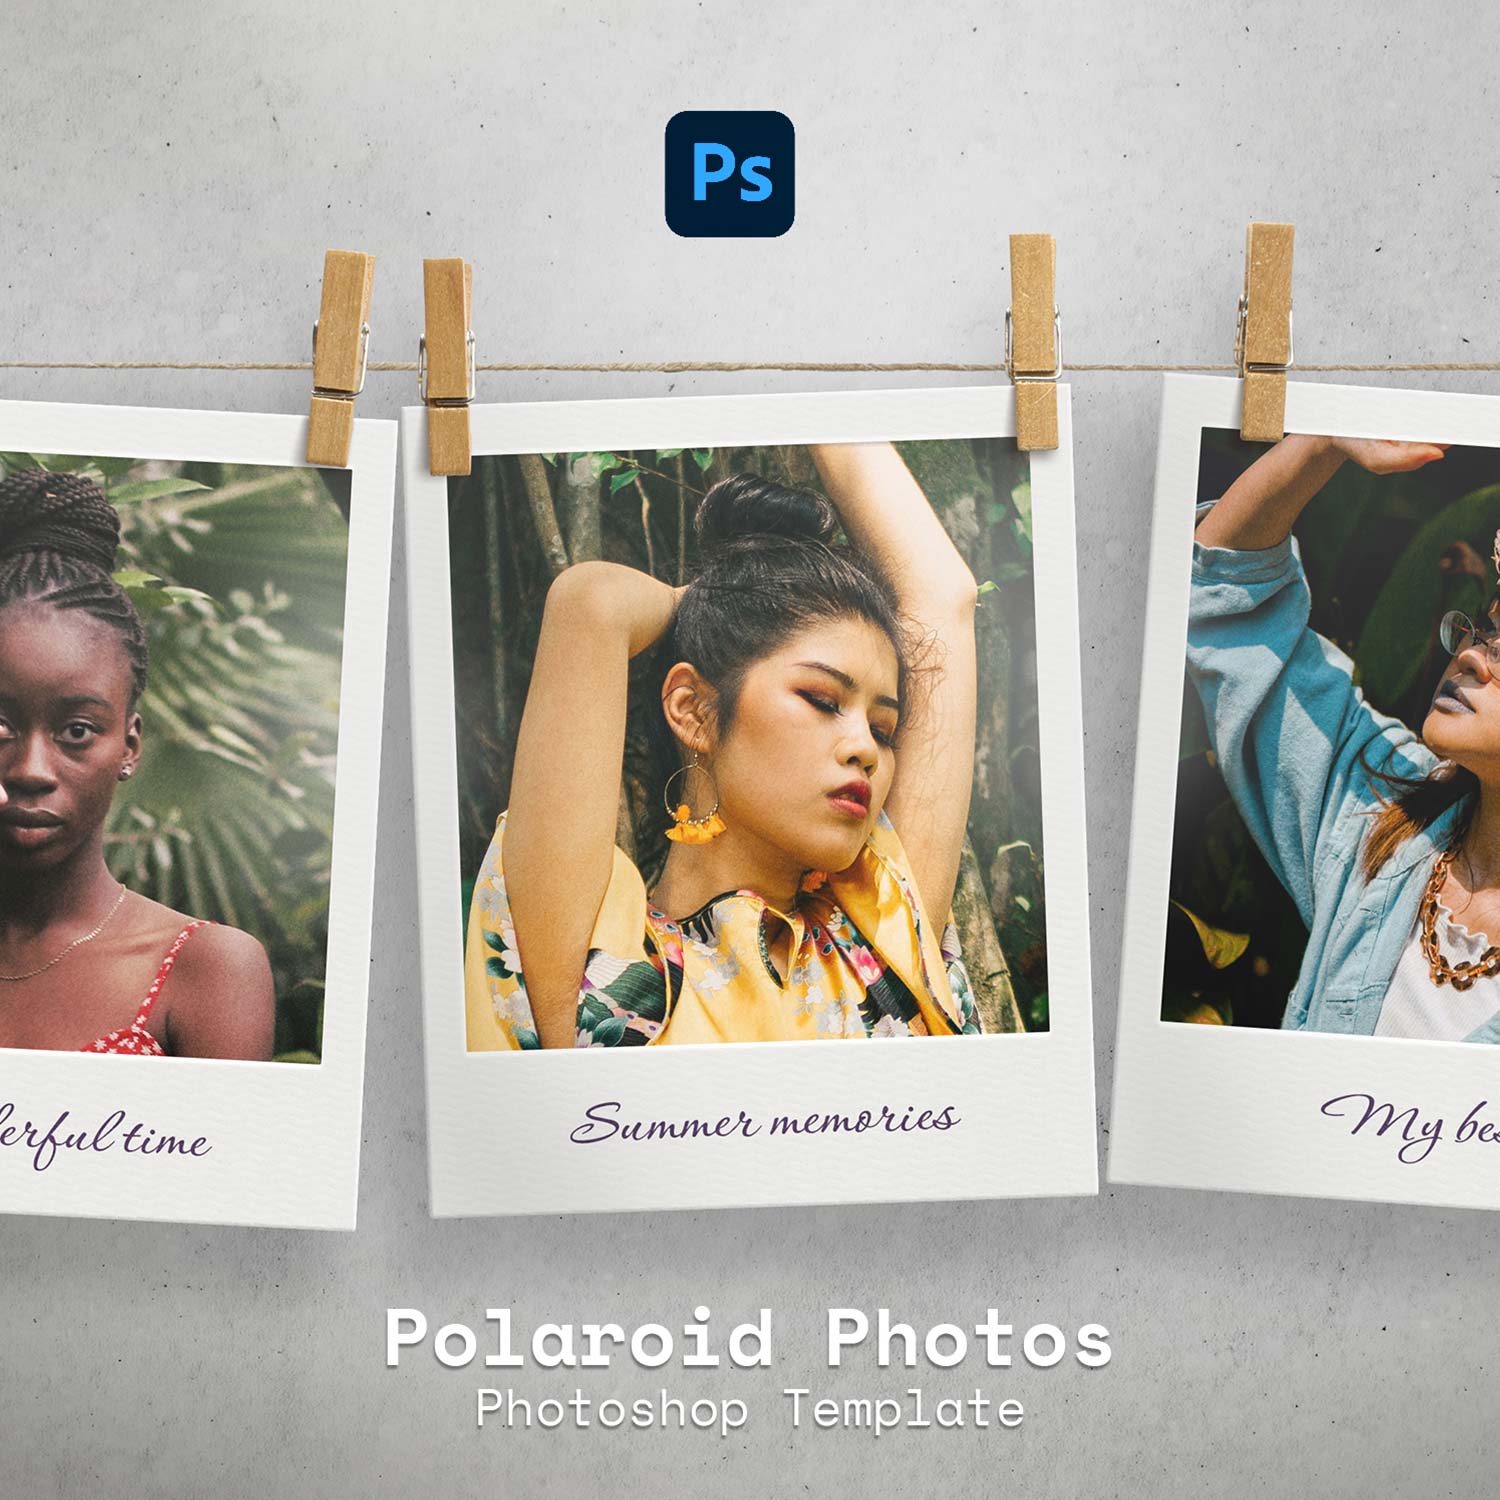 Polaroid Photos on Clothespins cover image.